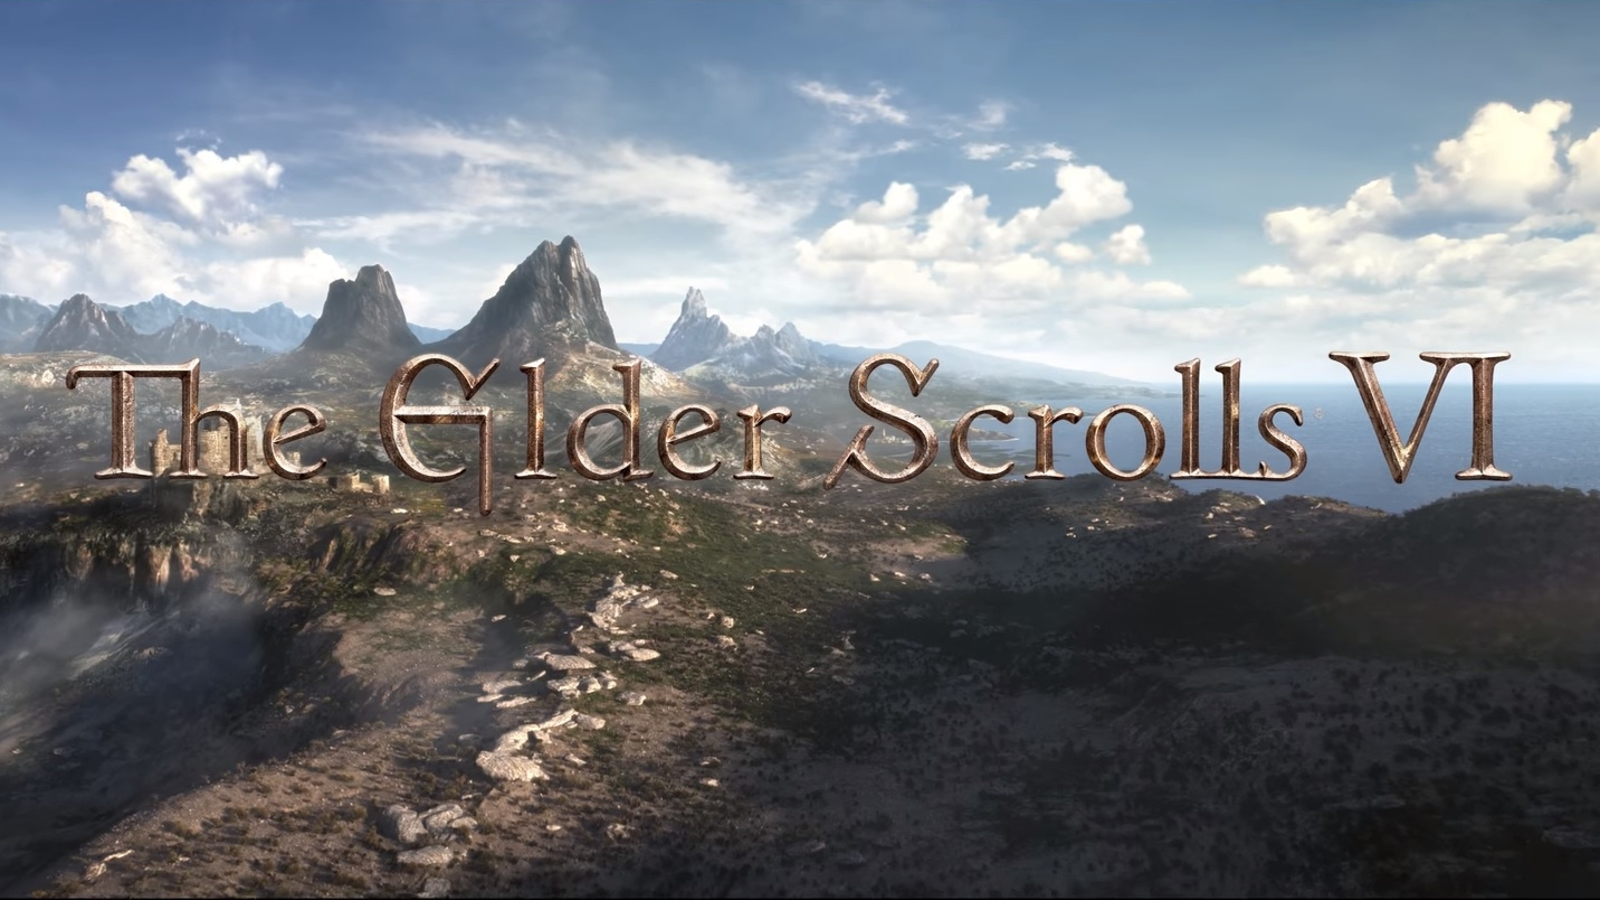 Elder Scrolls 6 location predications: Where we think Elder